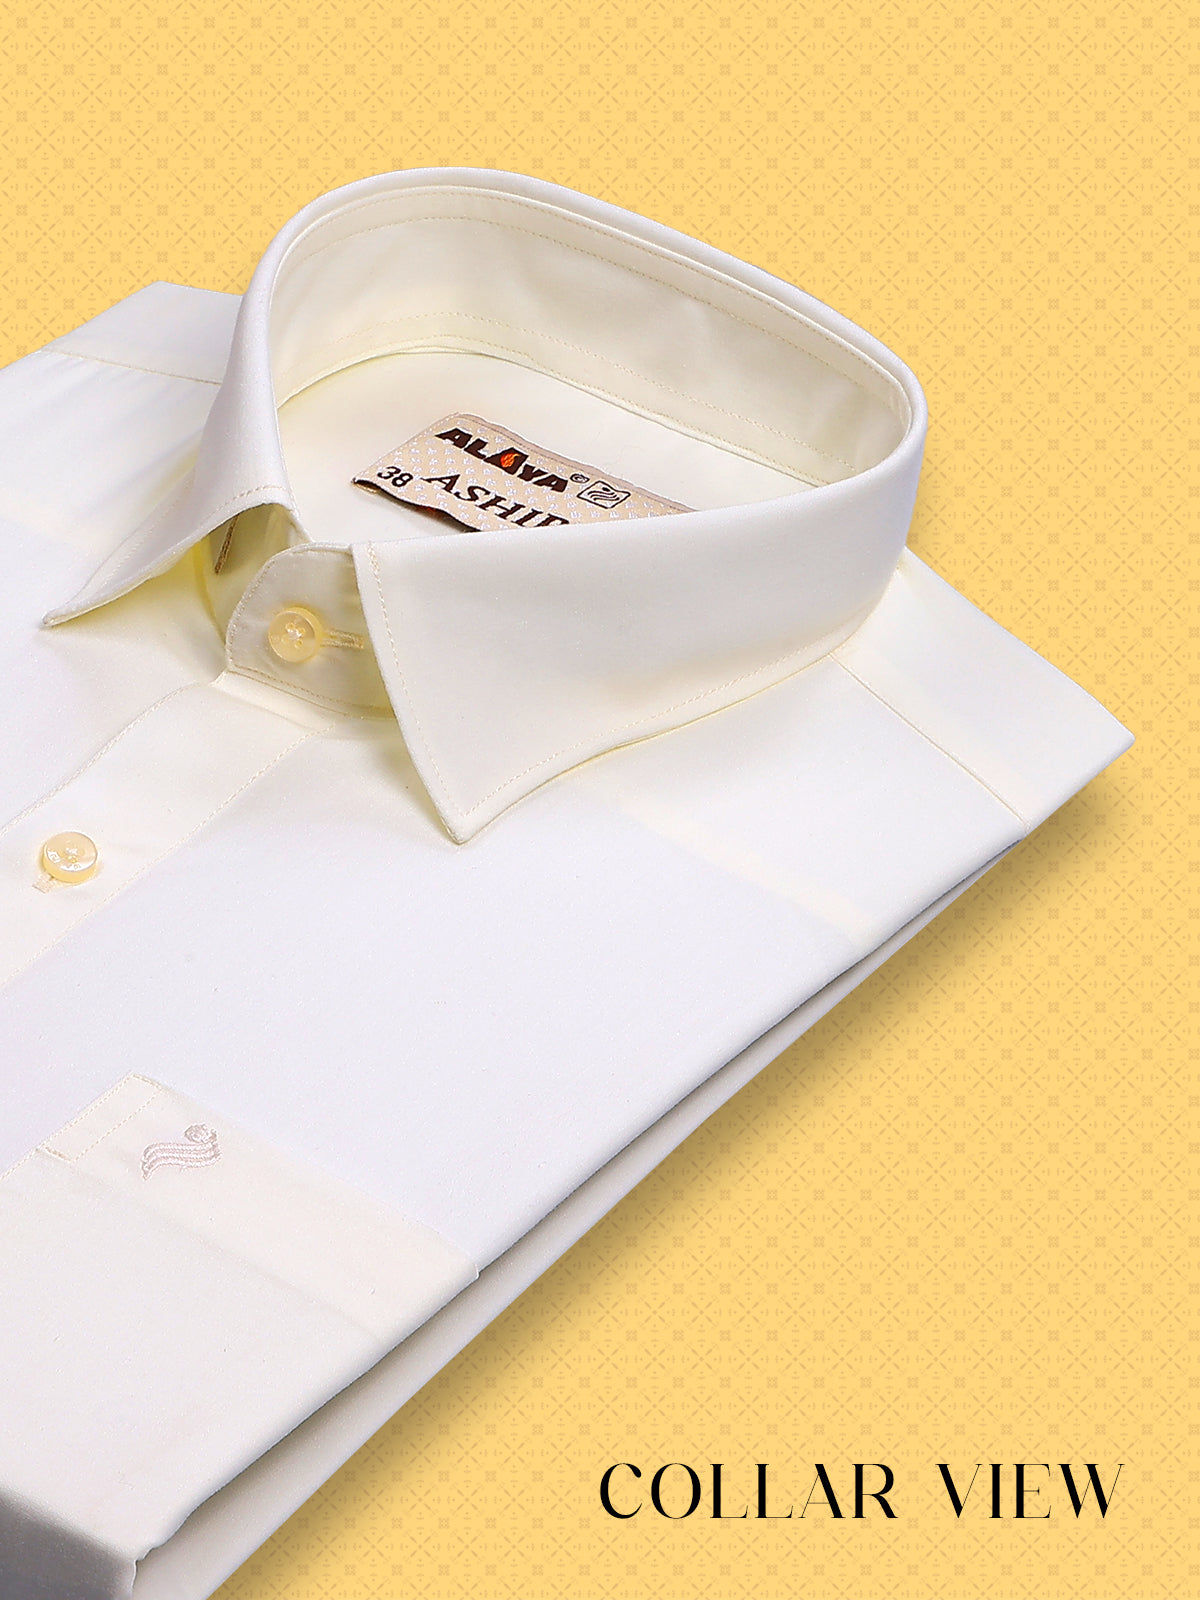 Ashirwad Cream Wedding Shirt For Men - Regular Fit